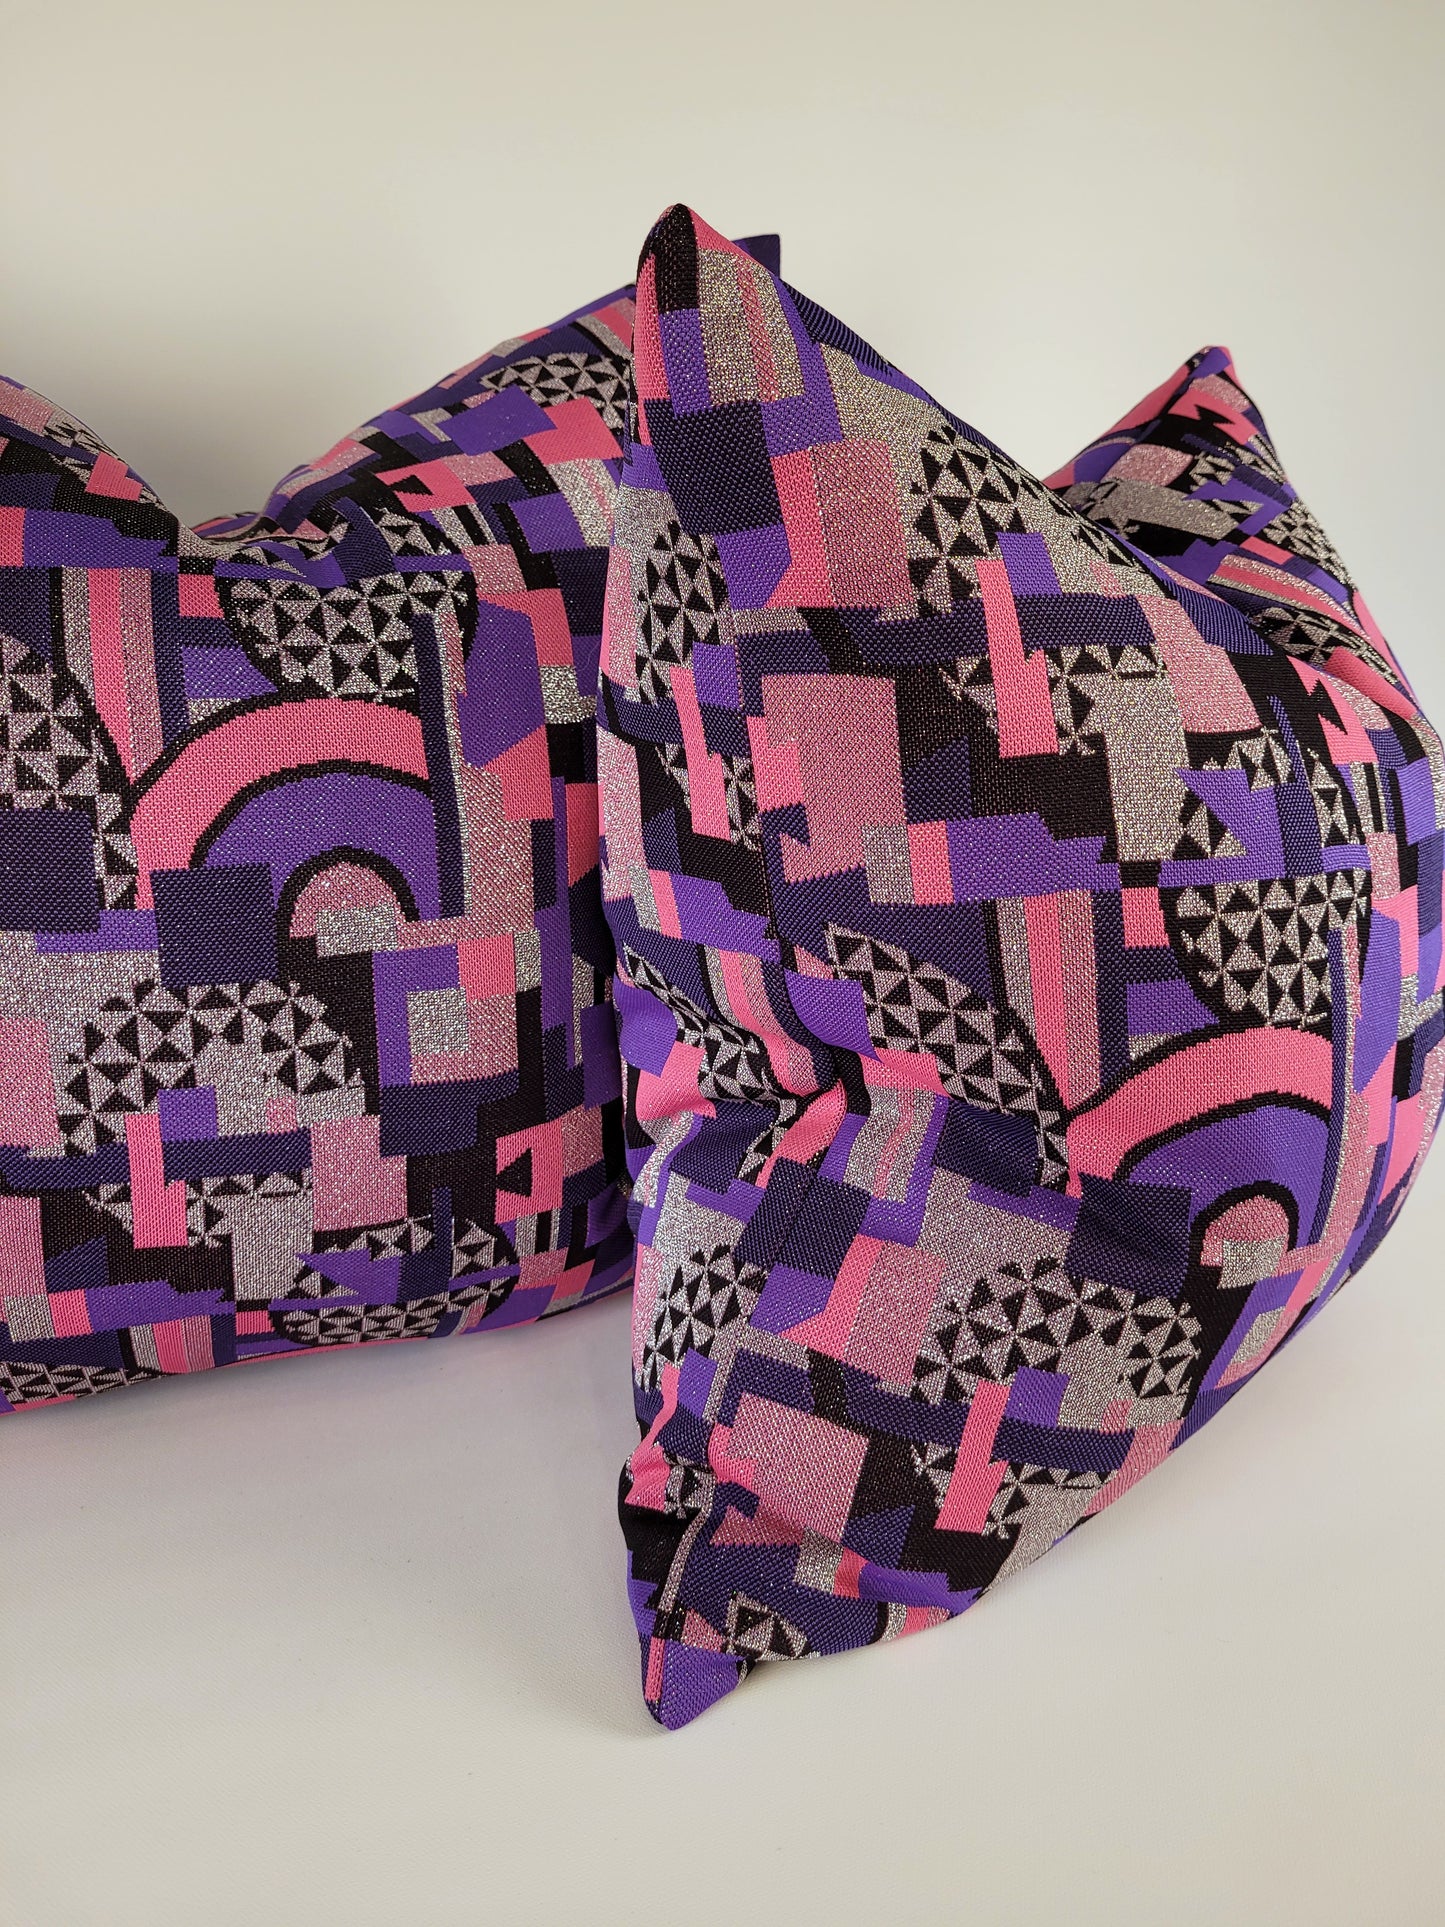 Sparkly Silver, Pink, Purple, Black Geometric Pillows 20"